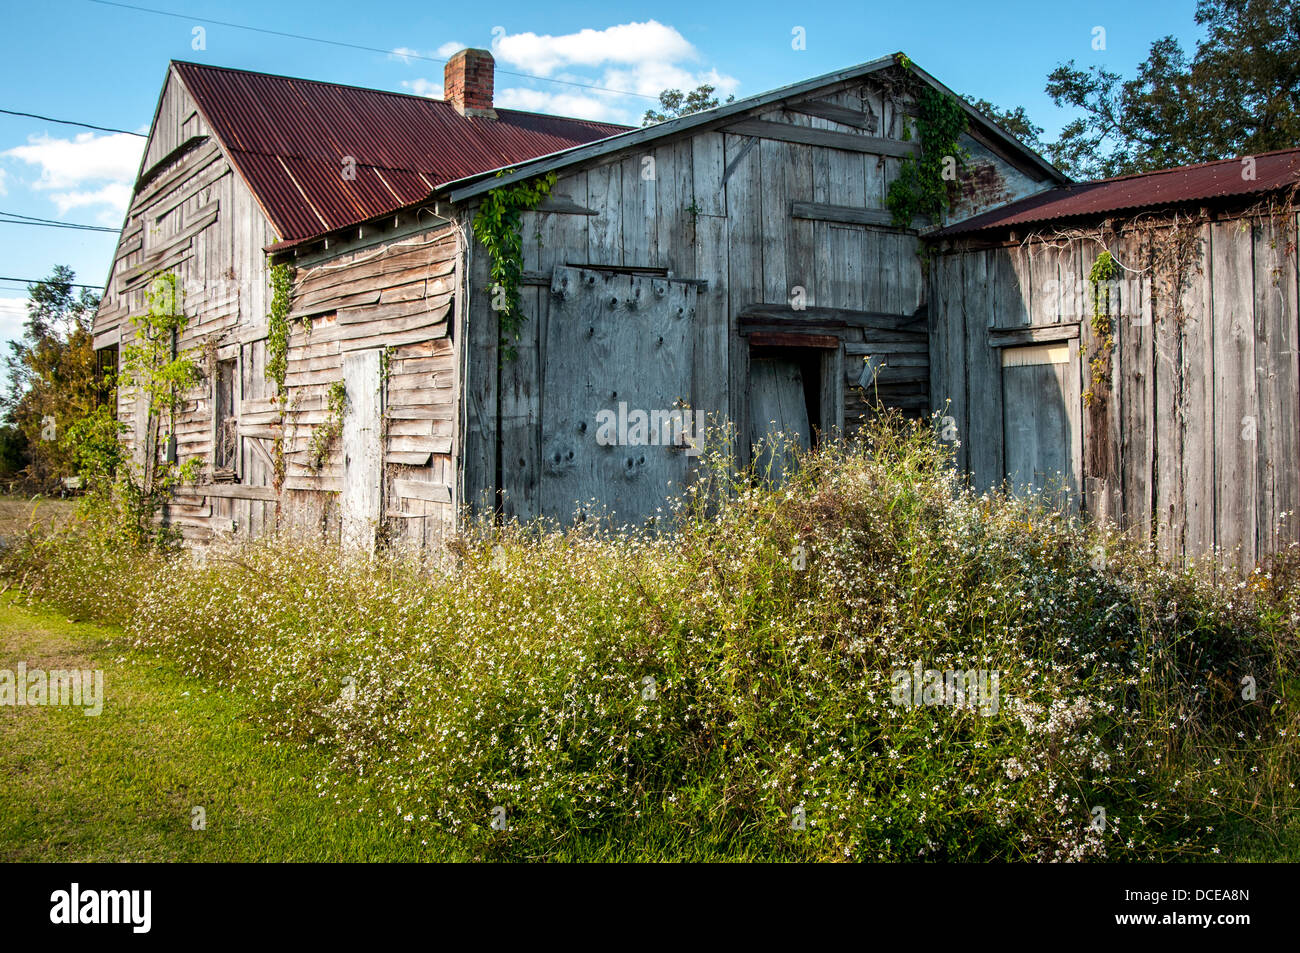 USA, Louisiana, Atchafalaya Basin, Plaquemine, abandoned clapboard house with tin roof. Stock Photo